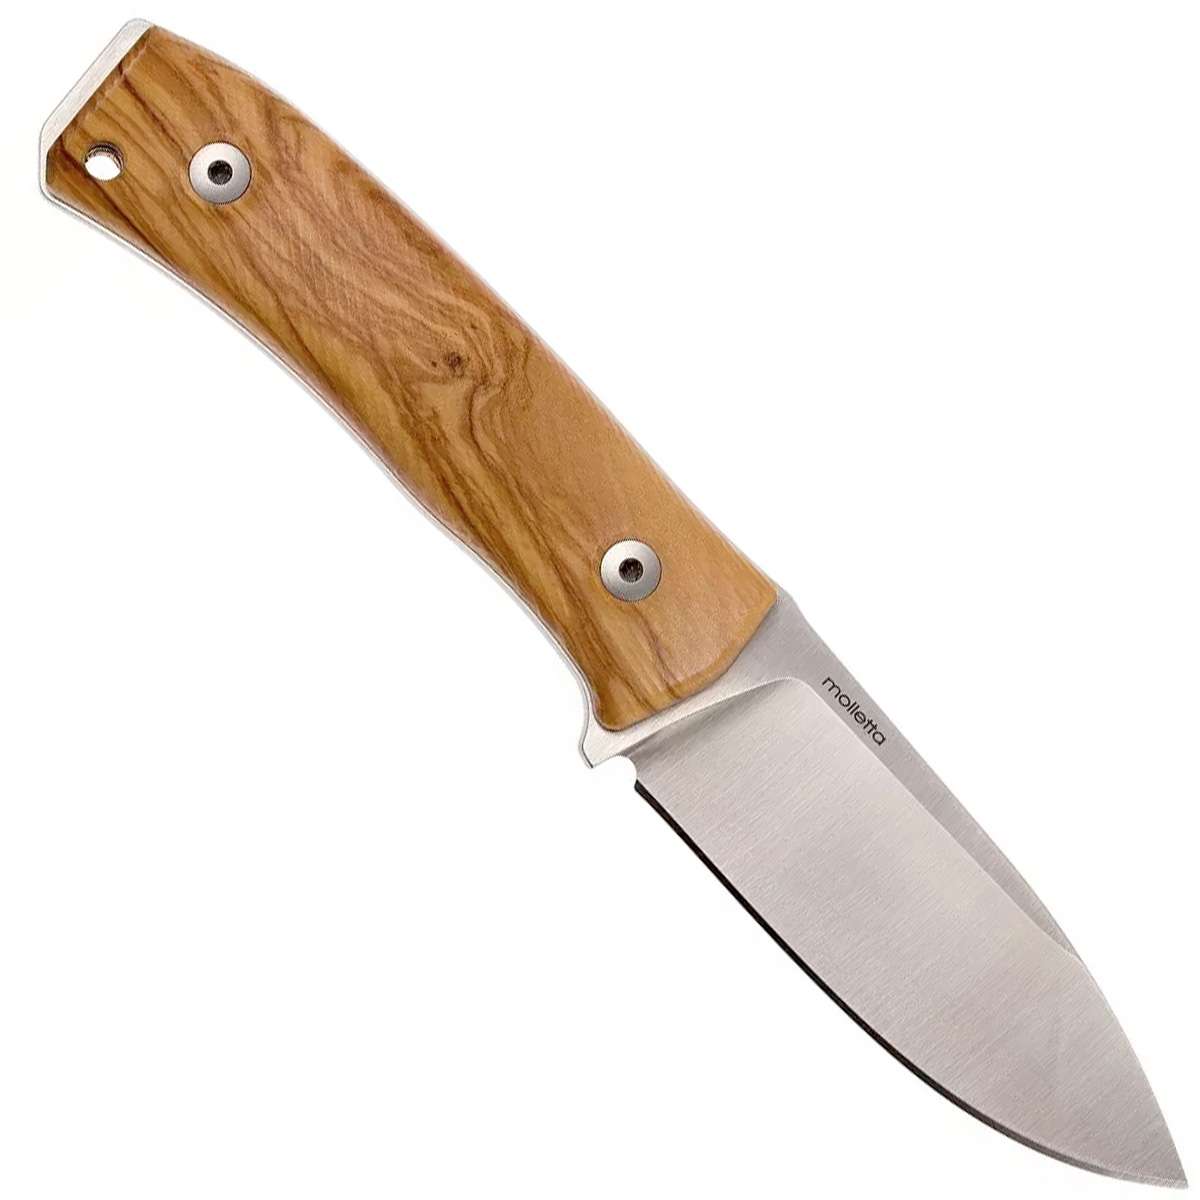 LionSTEEL M4 Fixed Blade Knife